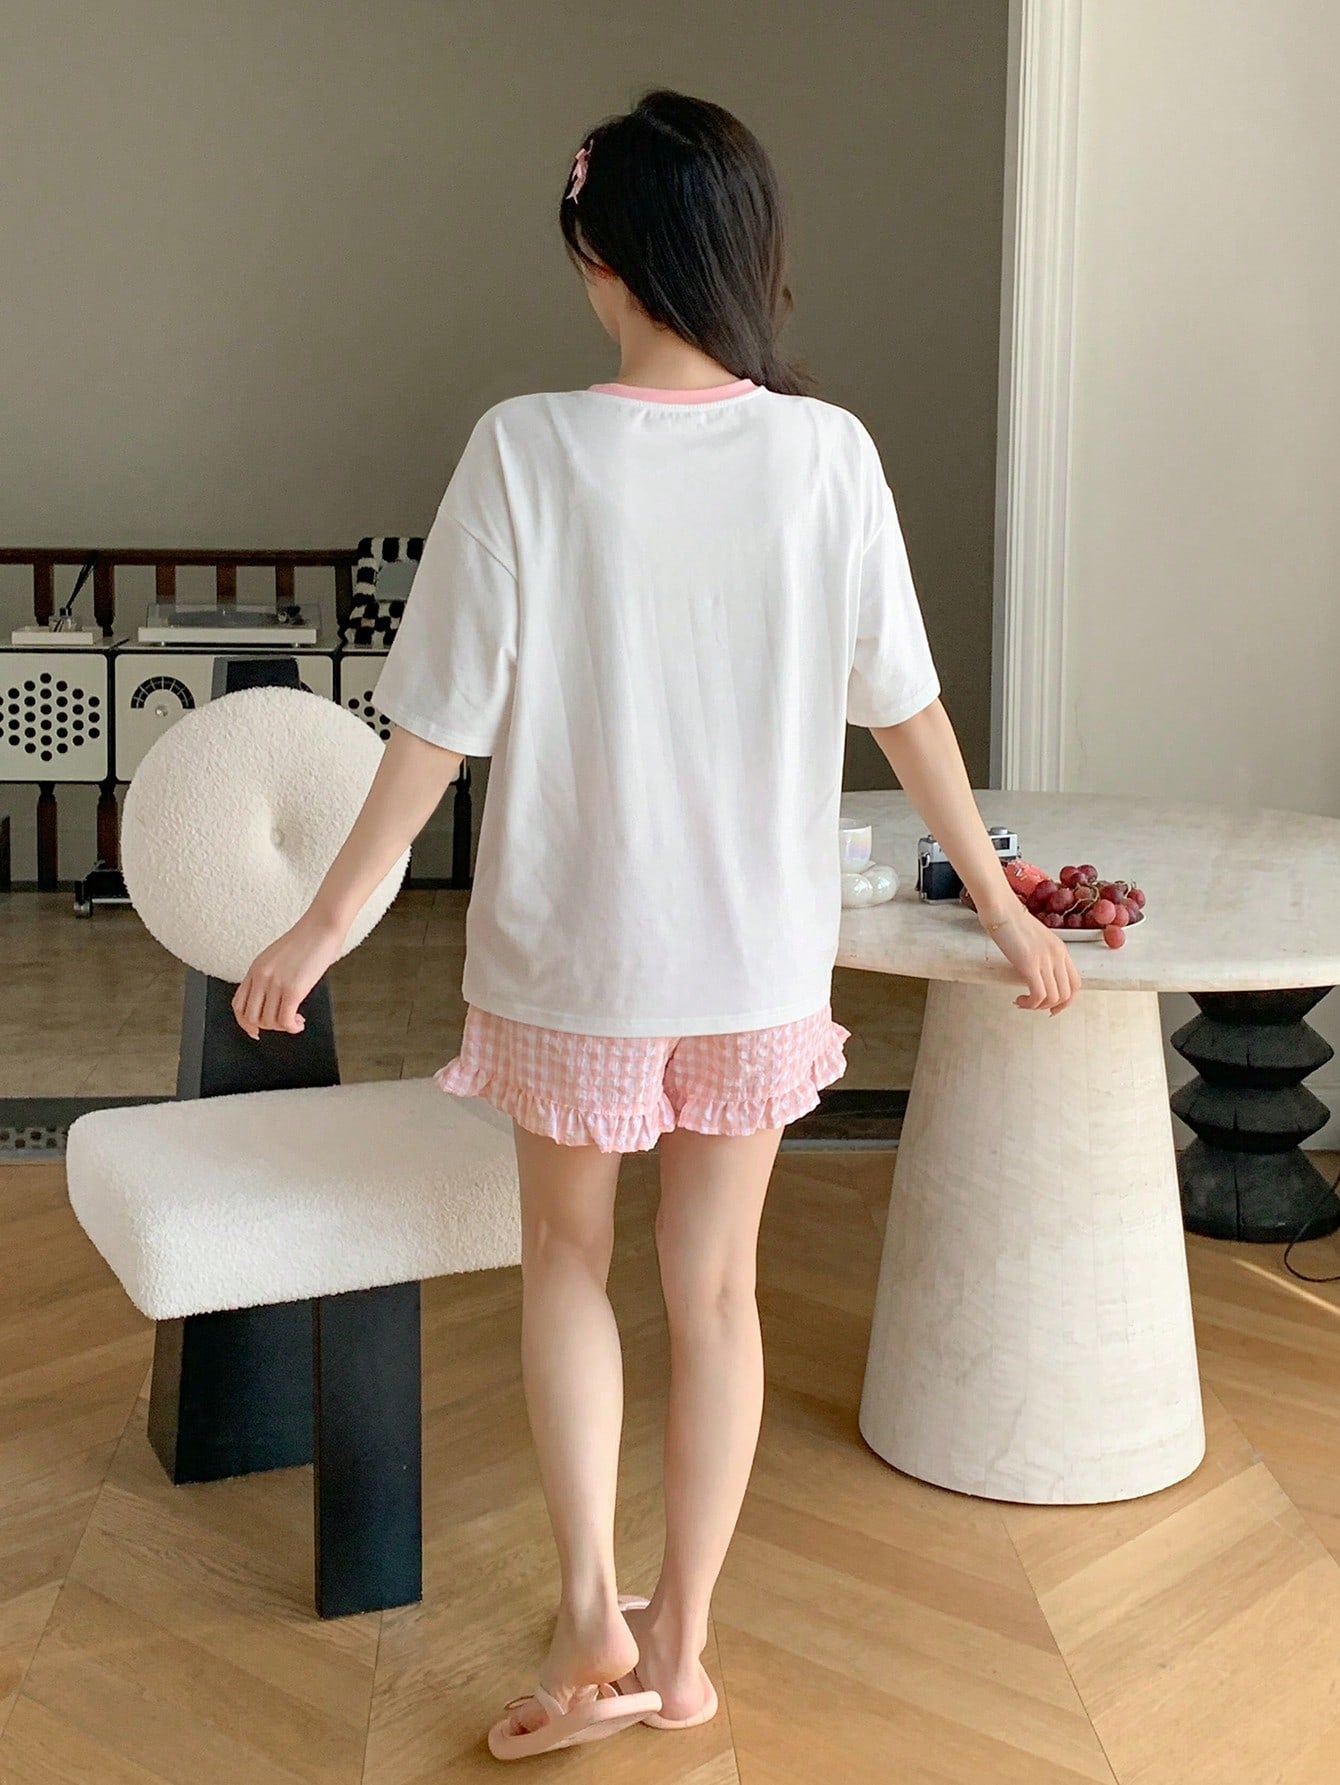 Women's Cute Tea Cup & Animal Print Short Sleeve Plaid Pajama Set For Summer